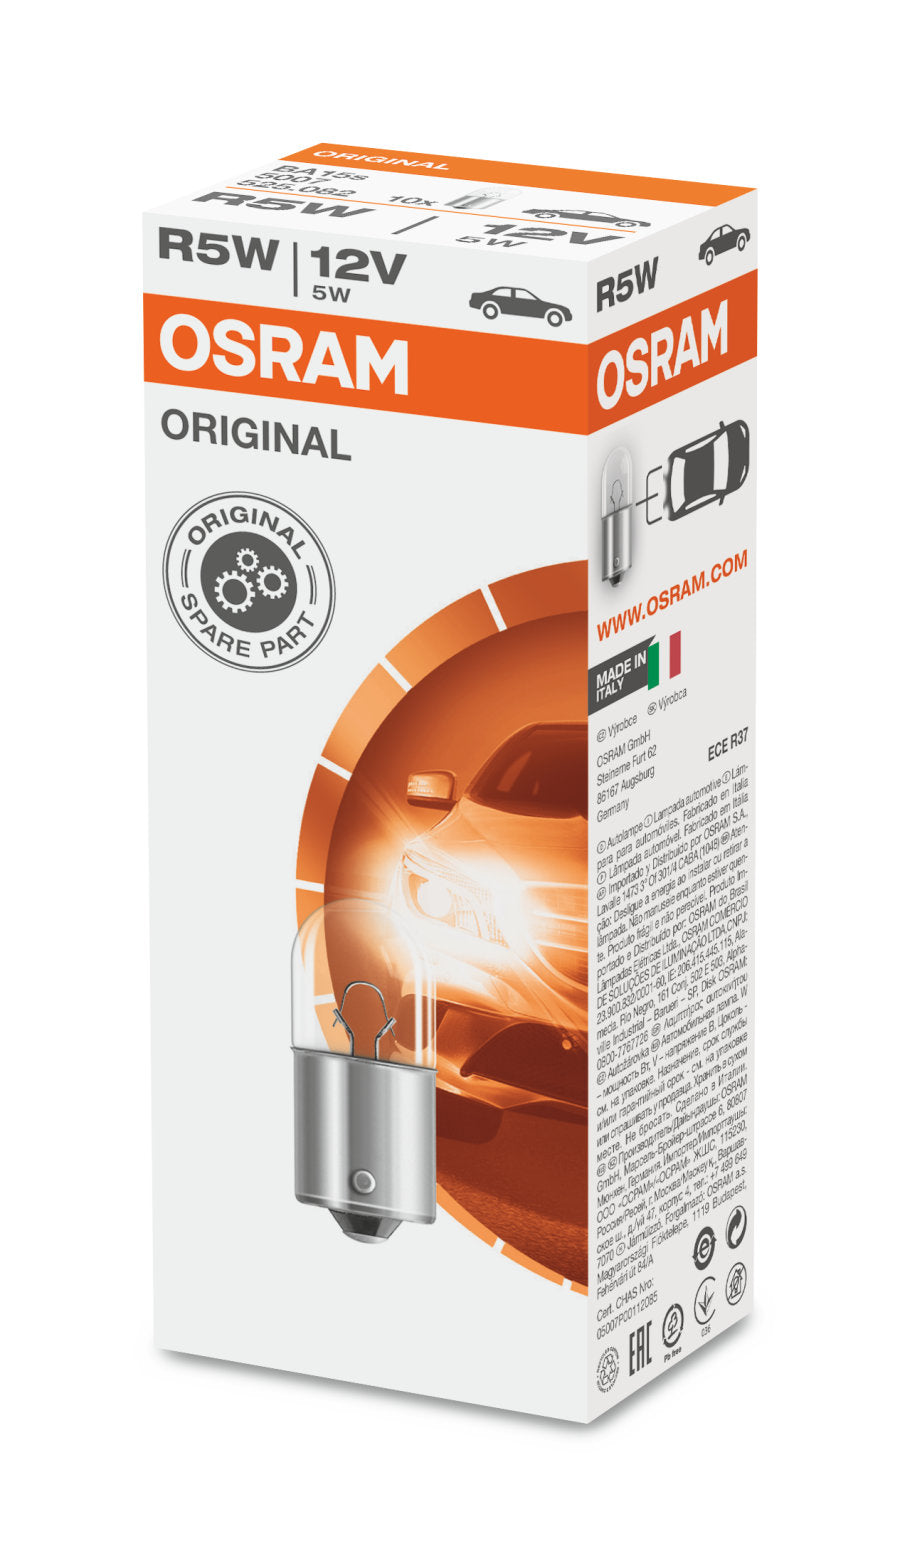 207 Osram Original R5W P21W Side & Tail Light Bulbs (Box of 10)